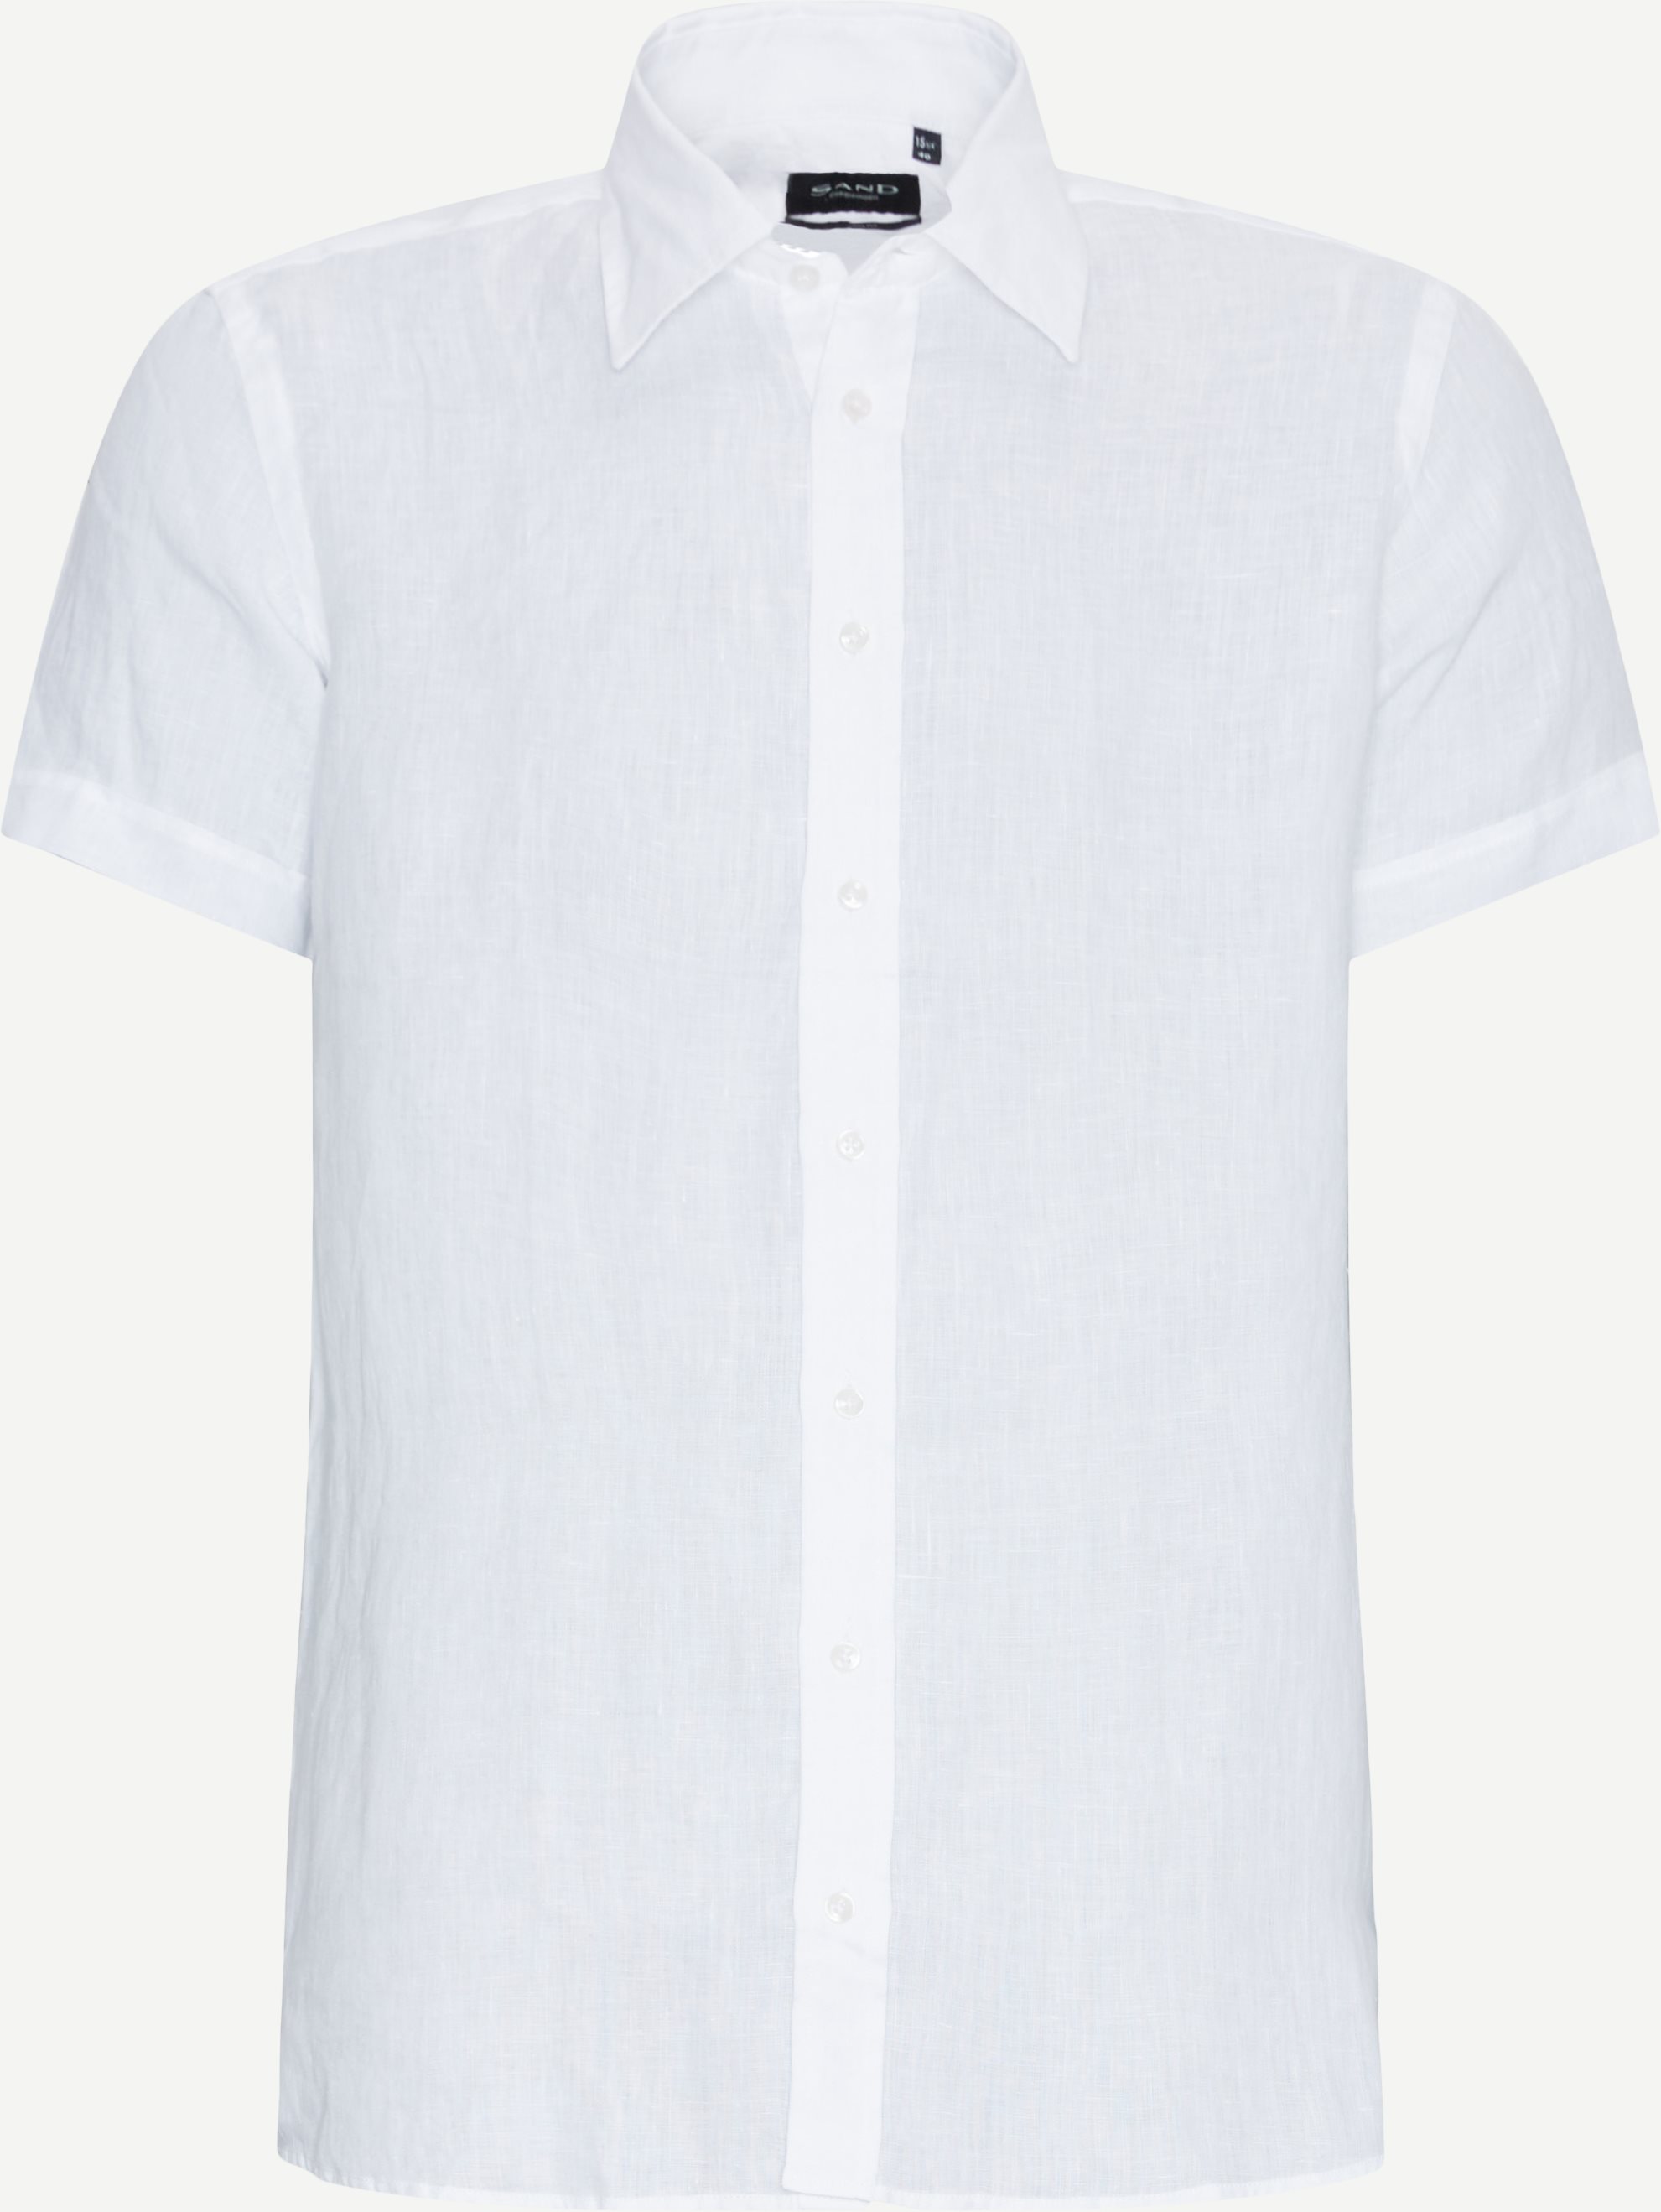 Sand Short-sleeved shirts 8823 STATE SOFT ST White